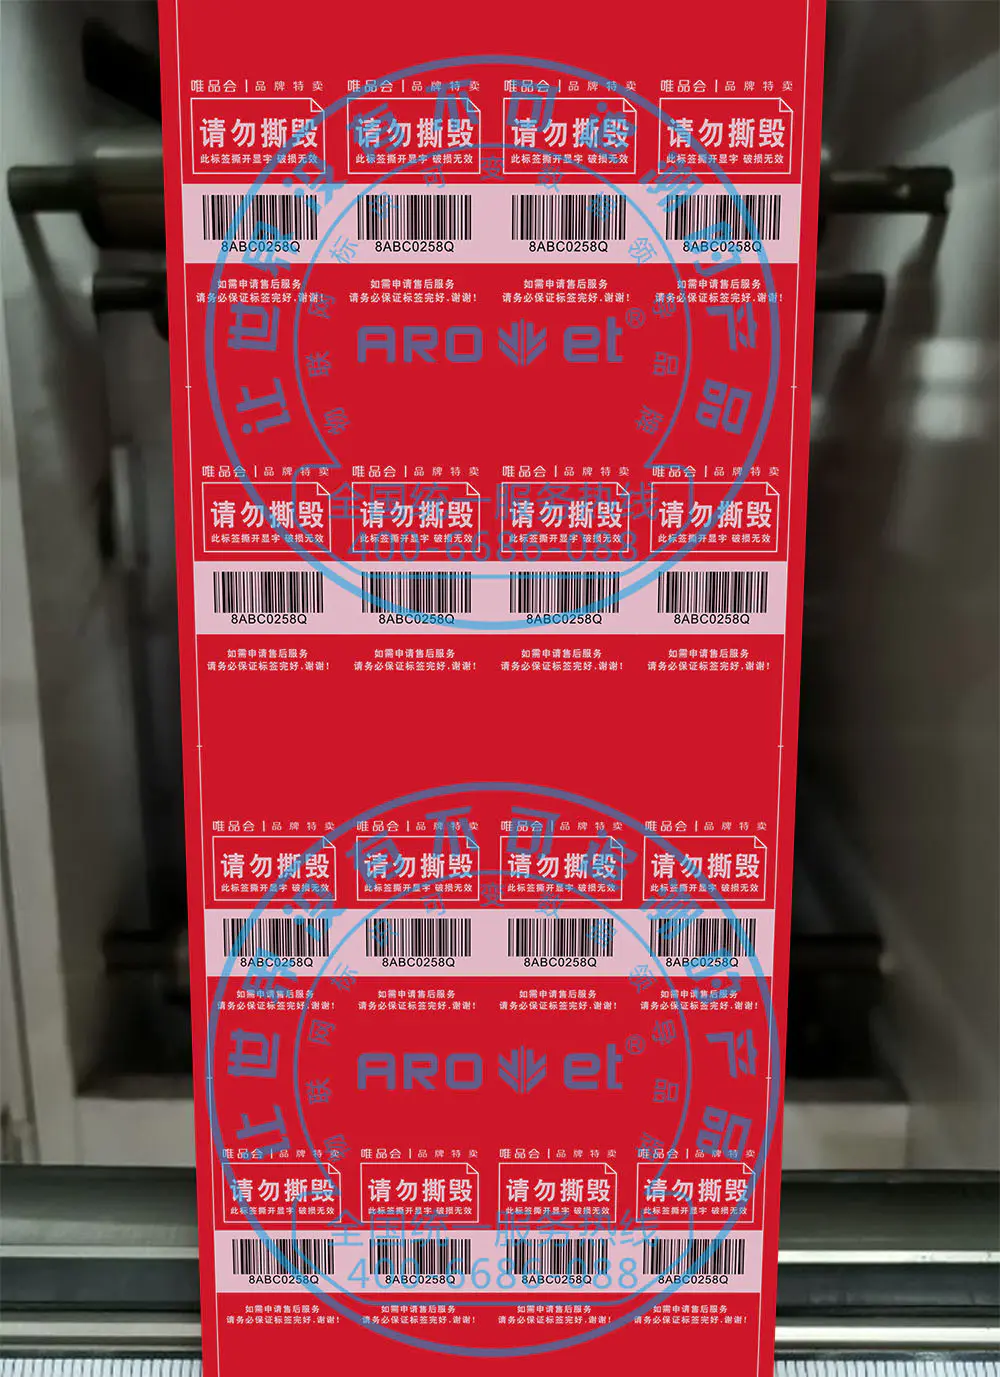 Small Batches of Labels Variable Data Digital UV Inkjet Printer